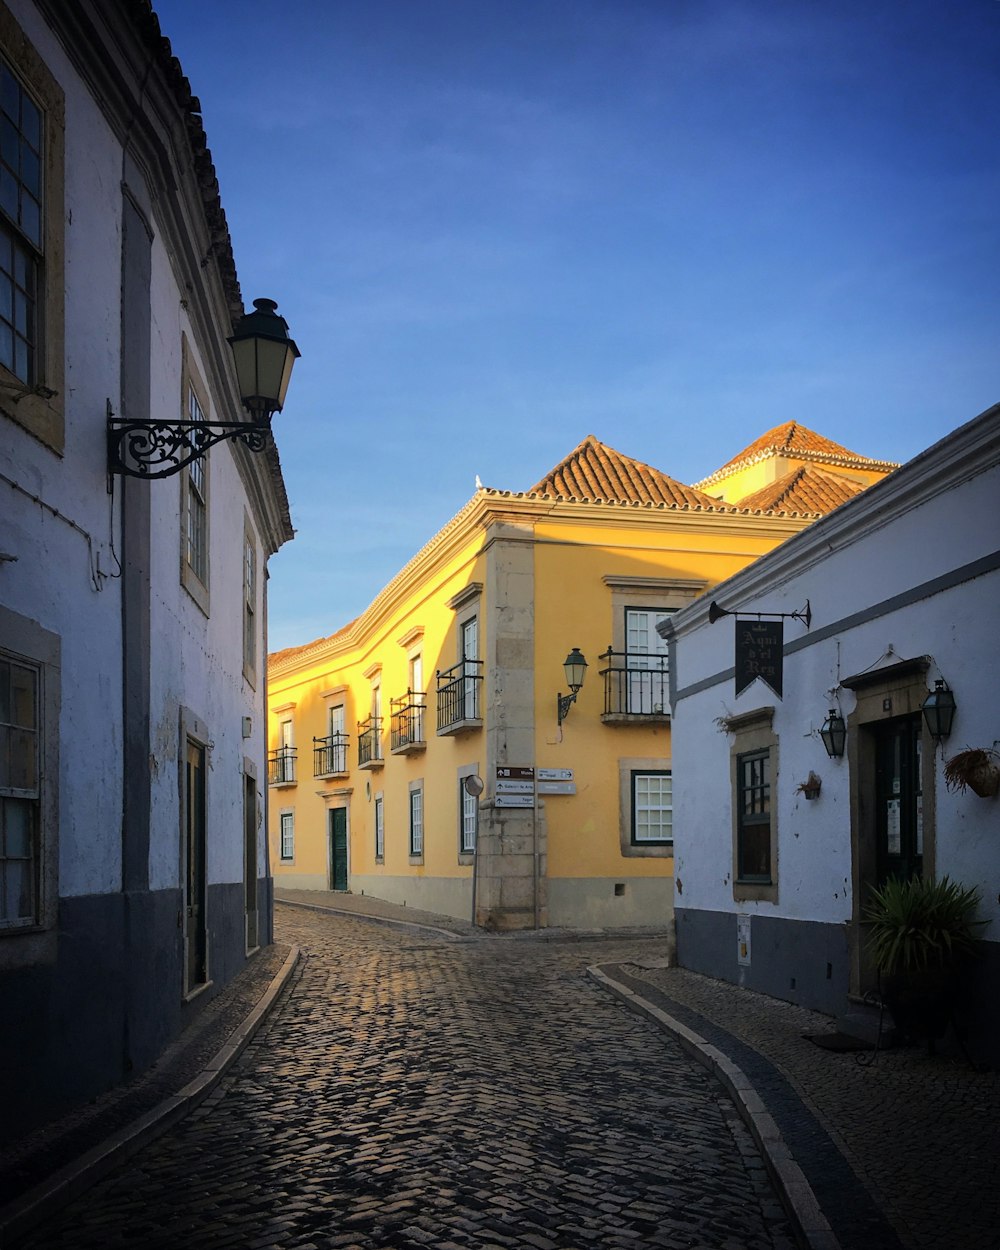 Una calle empedrada con un edificio amarillo al fondo